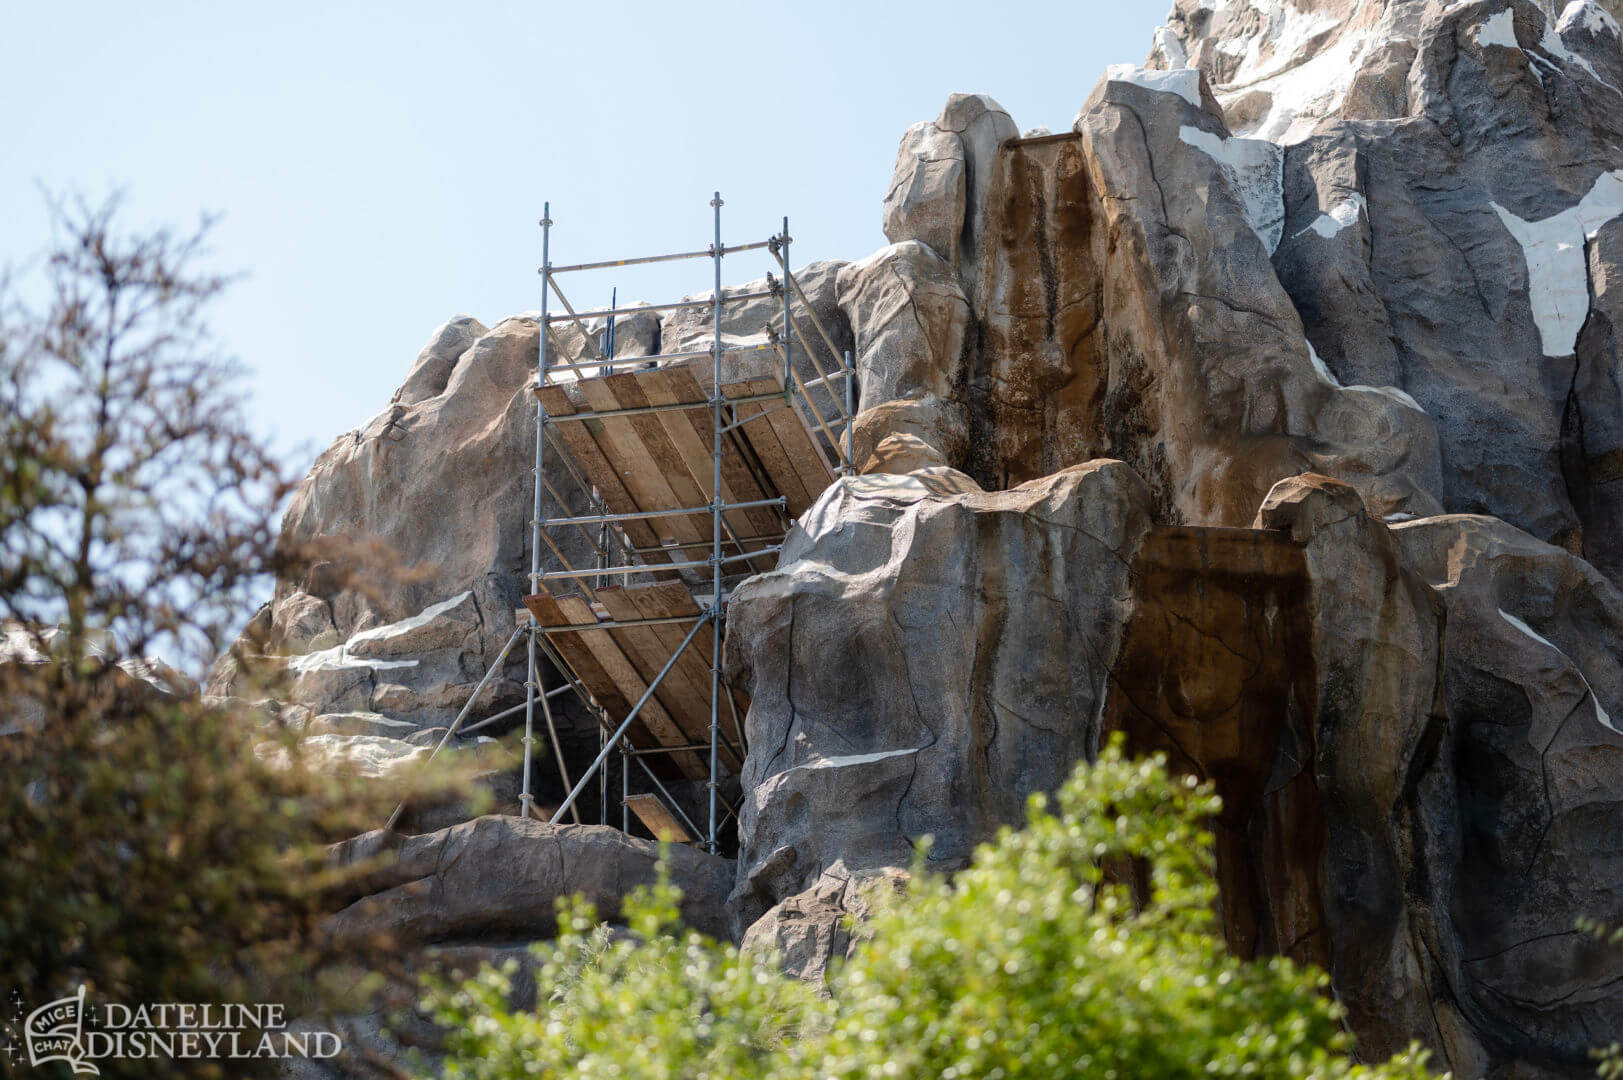 Disneyland, Disneyland Update: Fantasmic Aftermath, Spring Things &#038; Construction Views